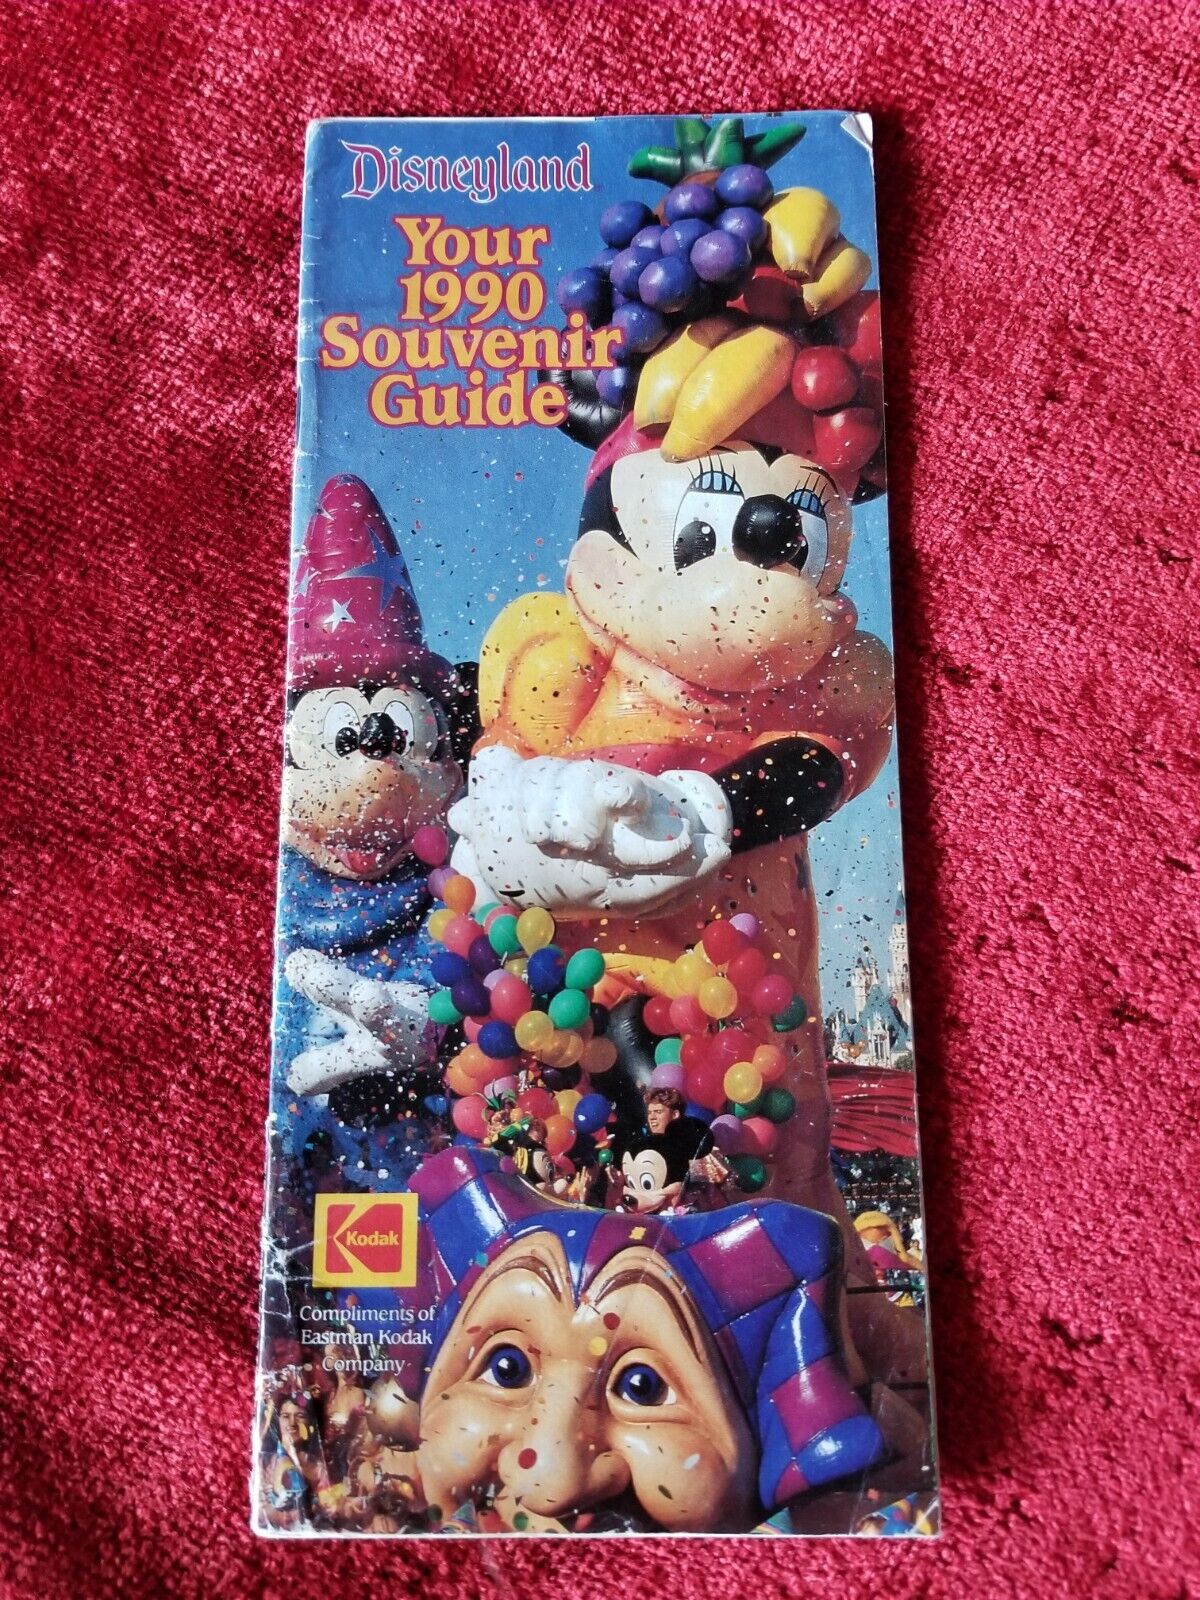 Disneyland Your 1990 Souvenir Guide - Map, Party Gras, 35th Anniversary, Kodak